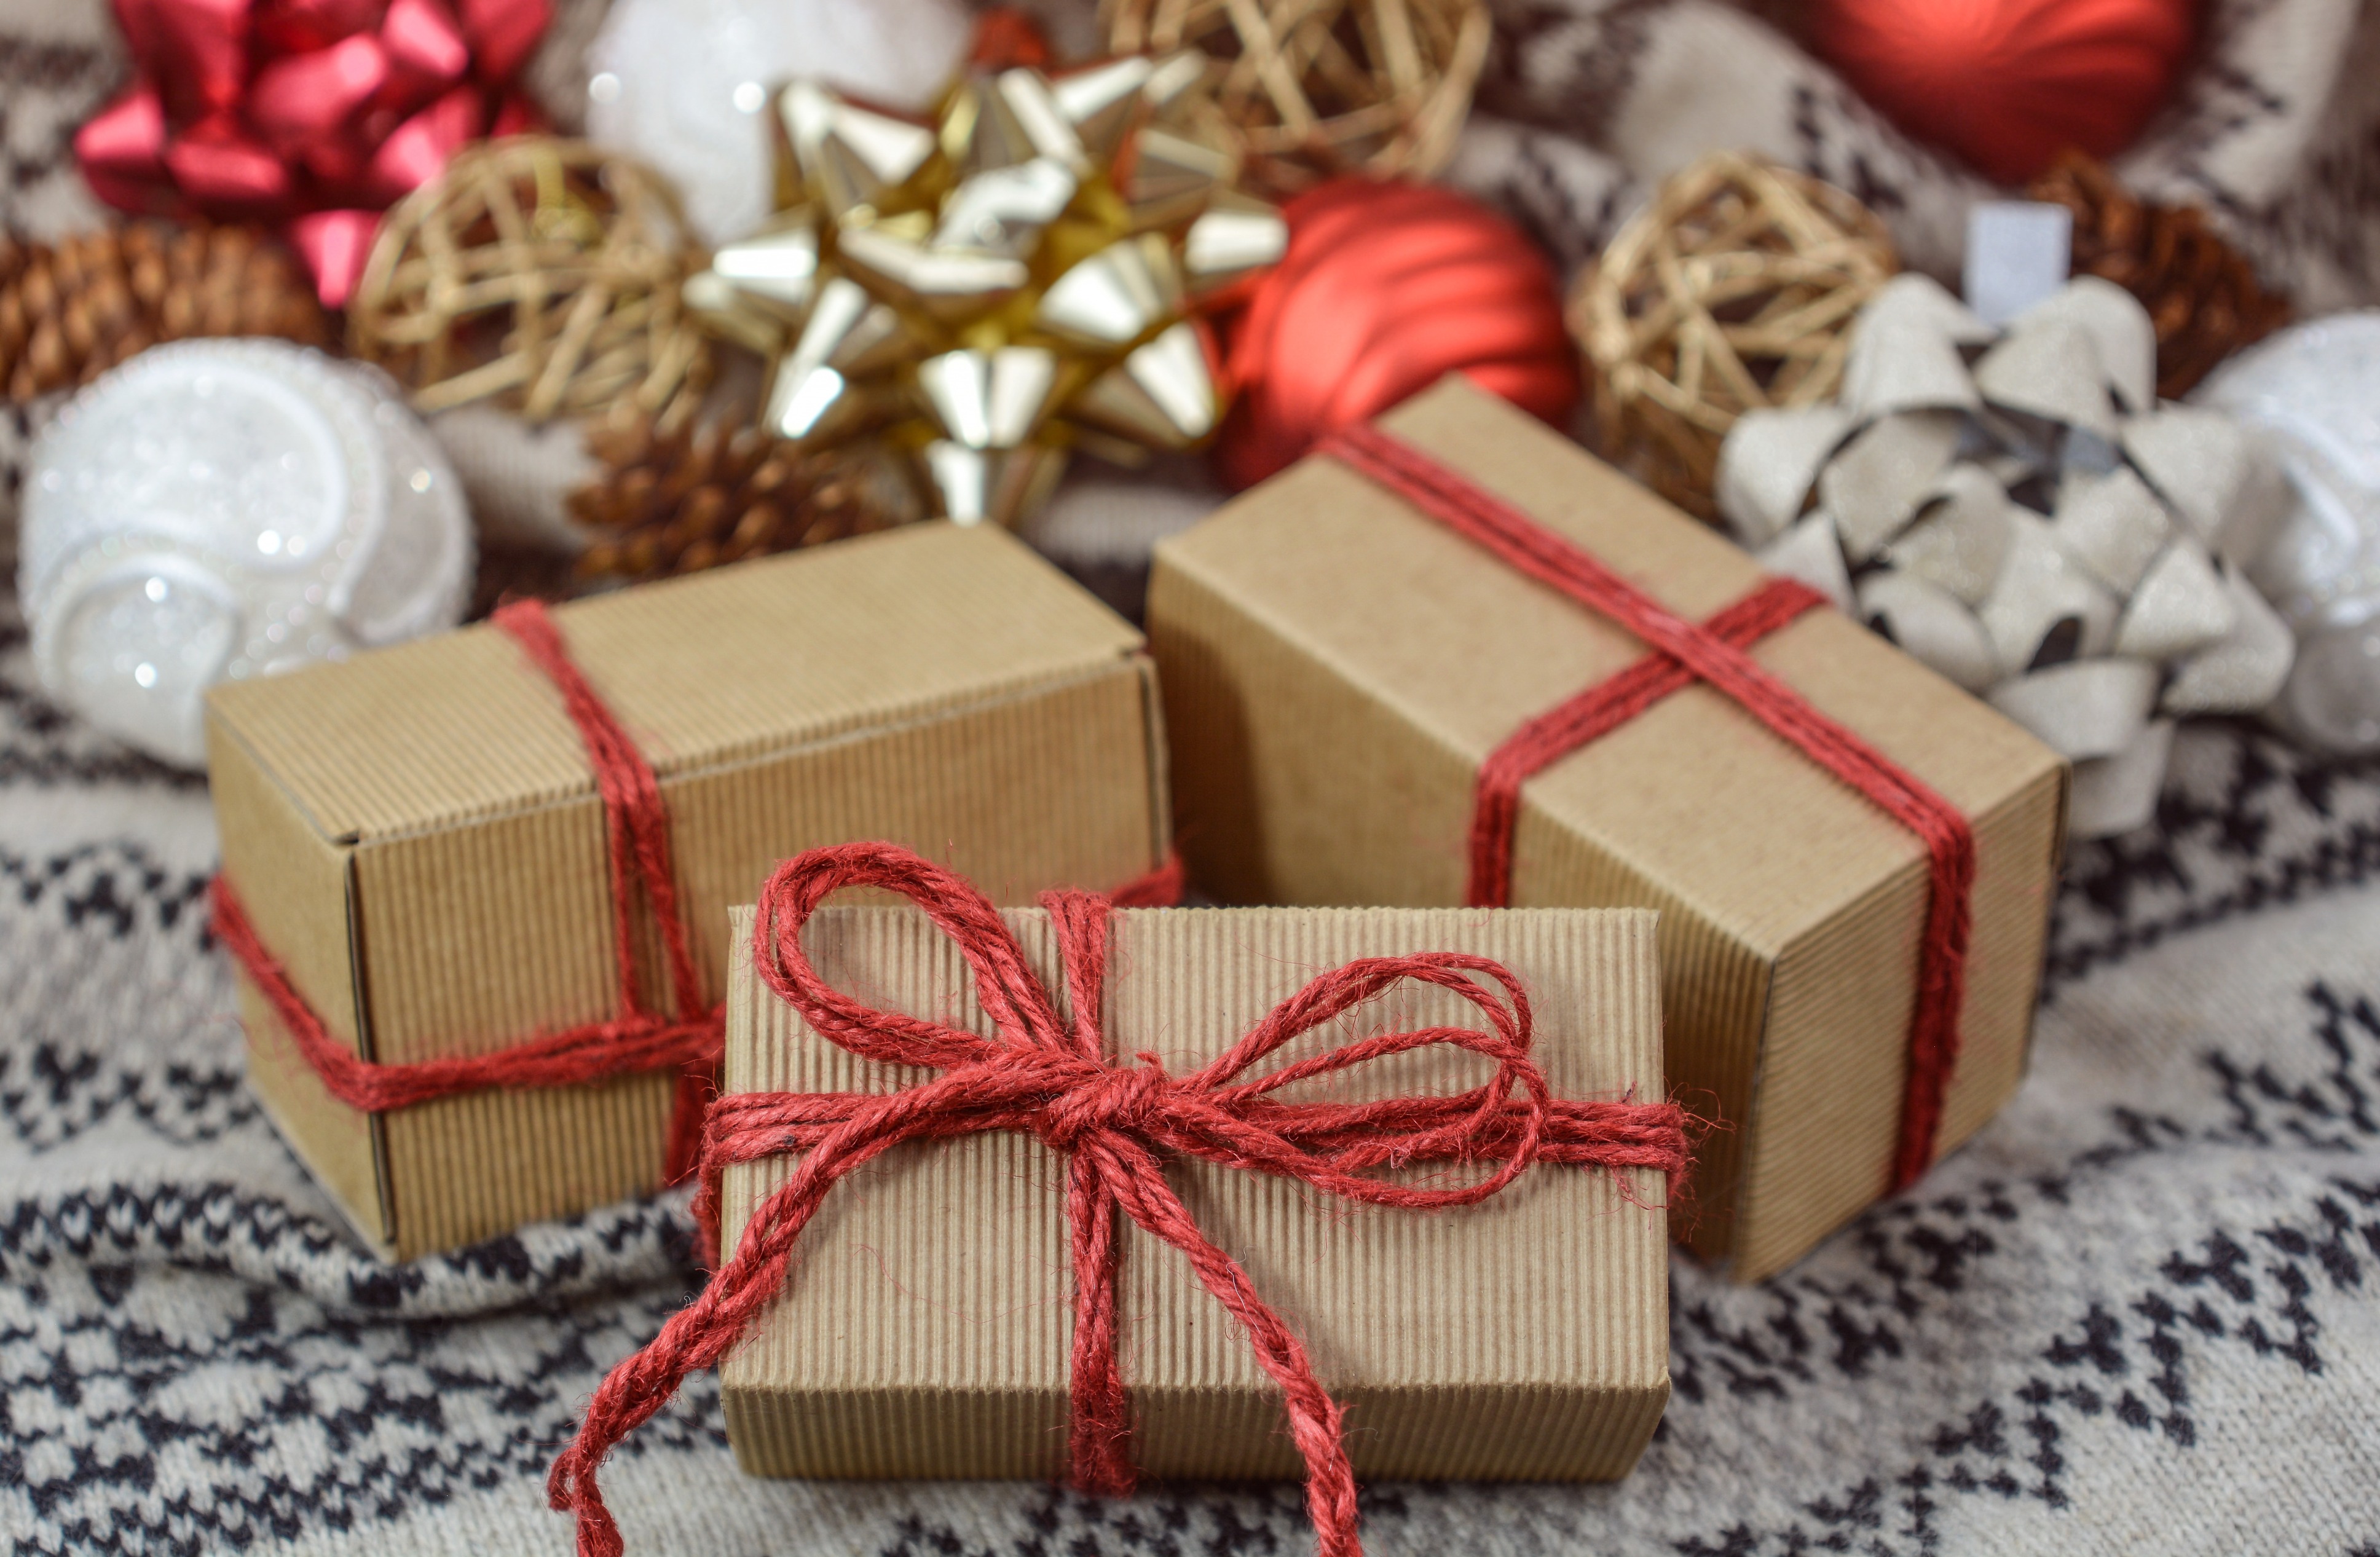 Canva - Christmas Gifts On Holidays.jpg